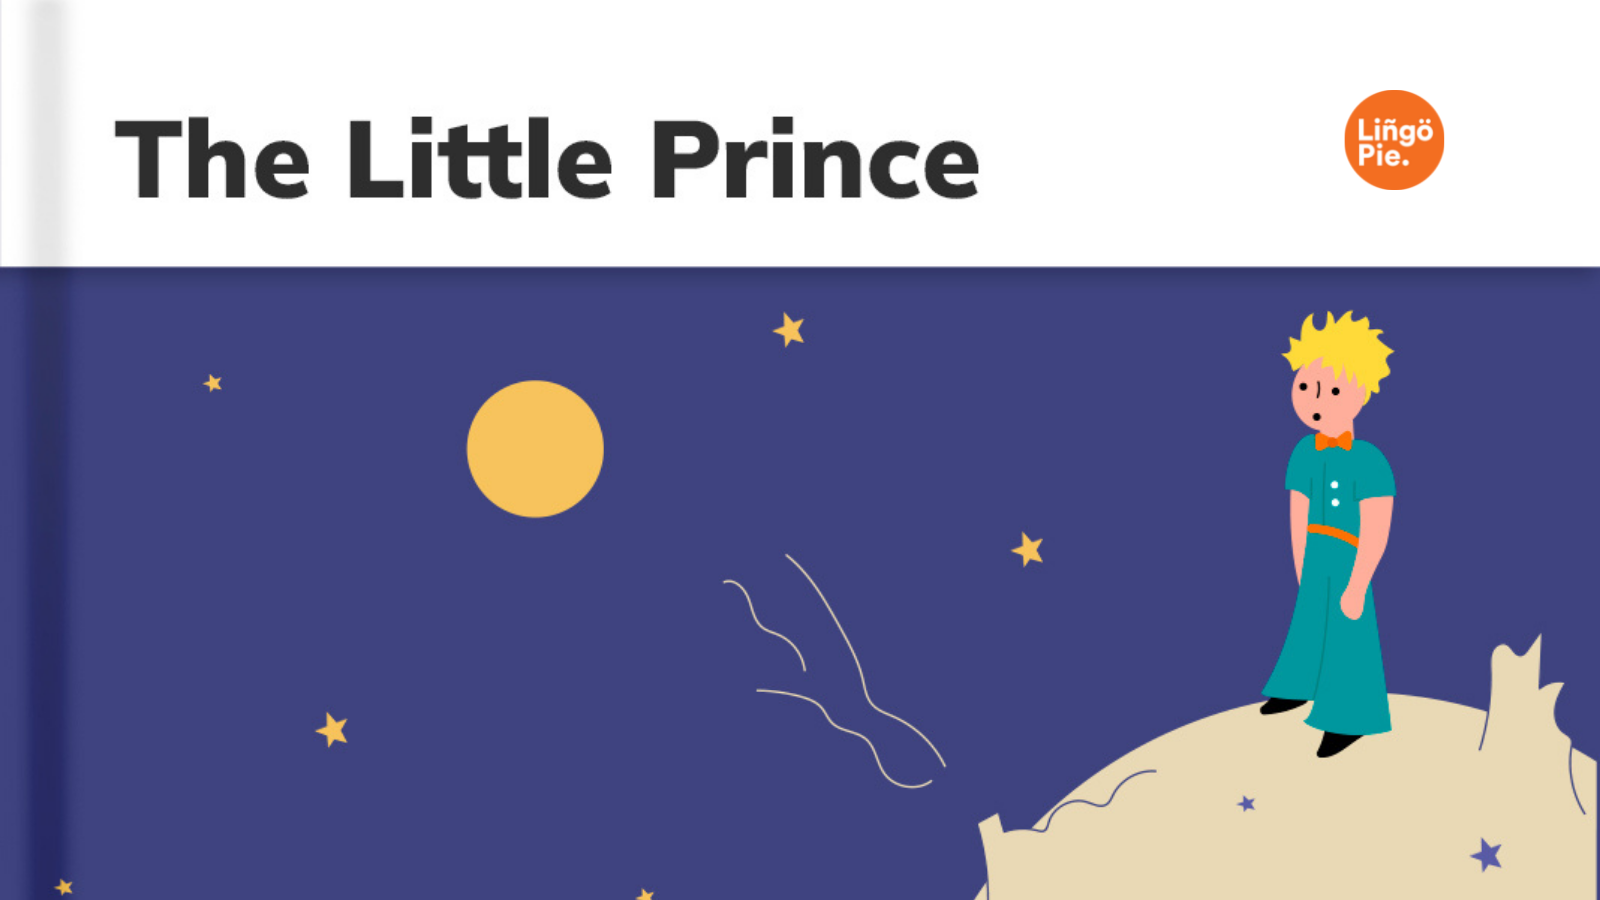 The Little Prince on Lingopie.